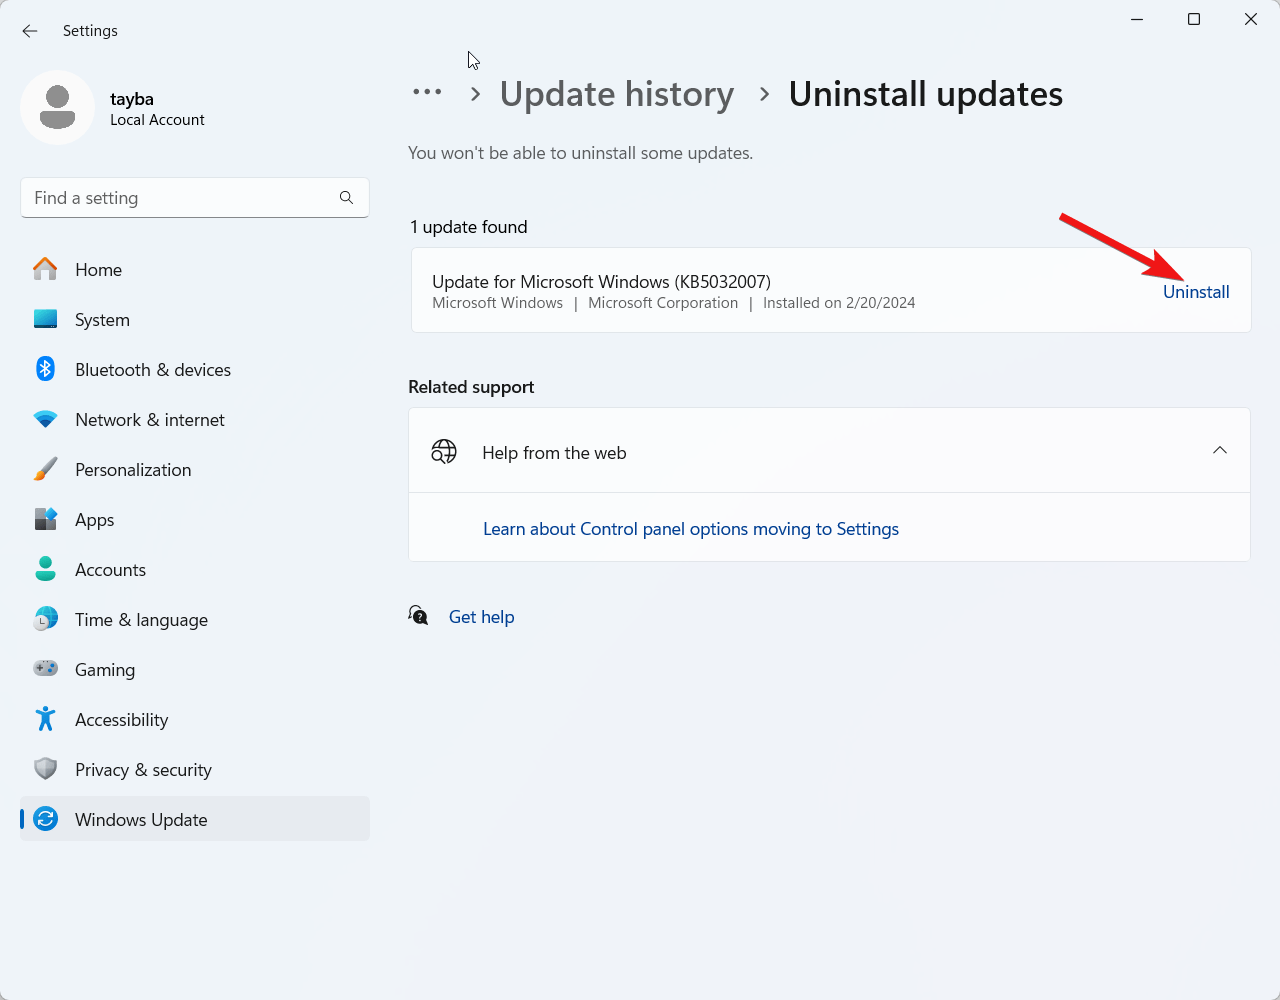 Select uninstall to uninstall Windows updates